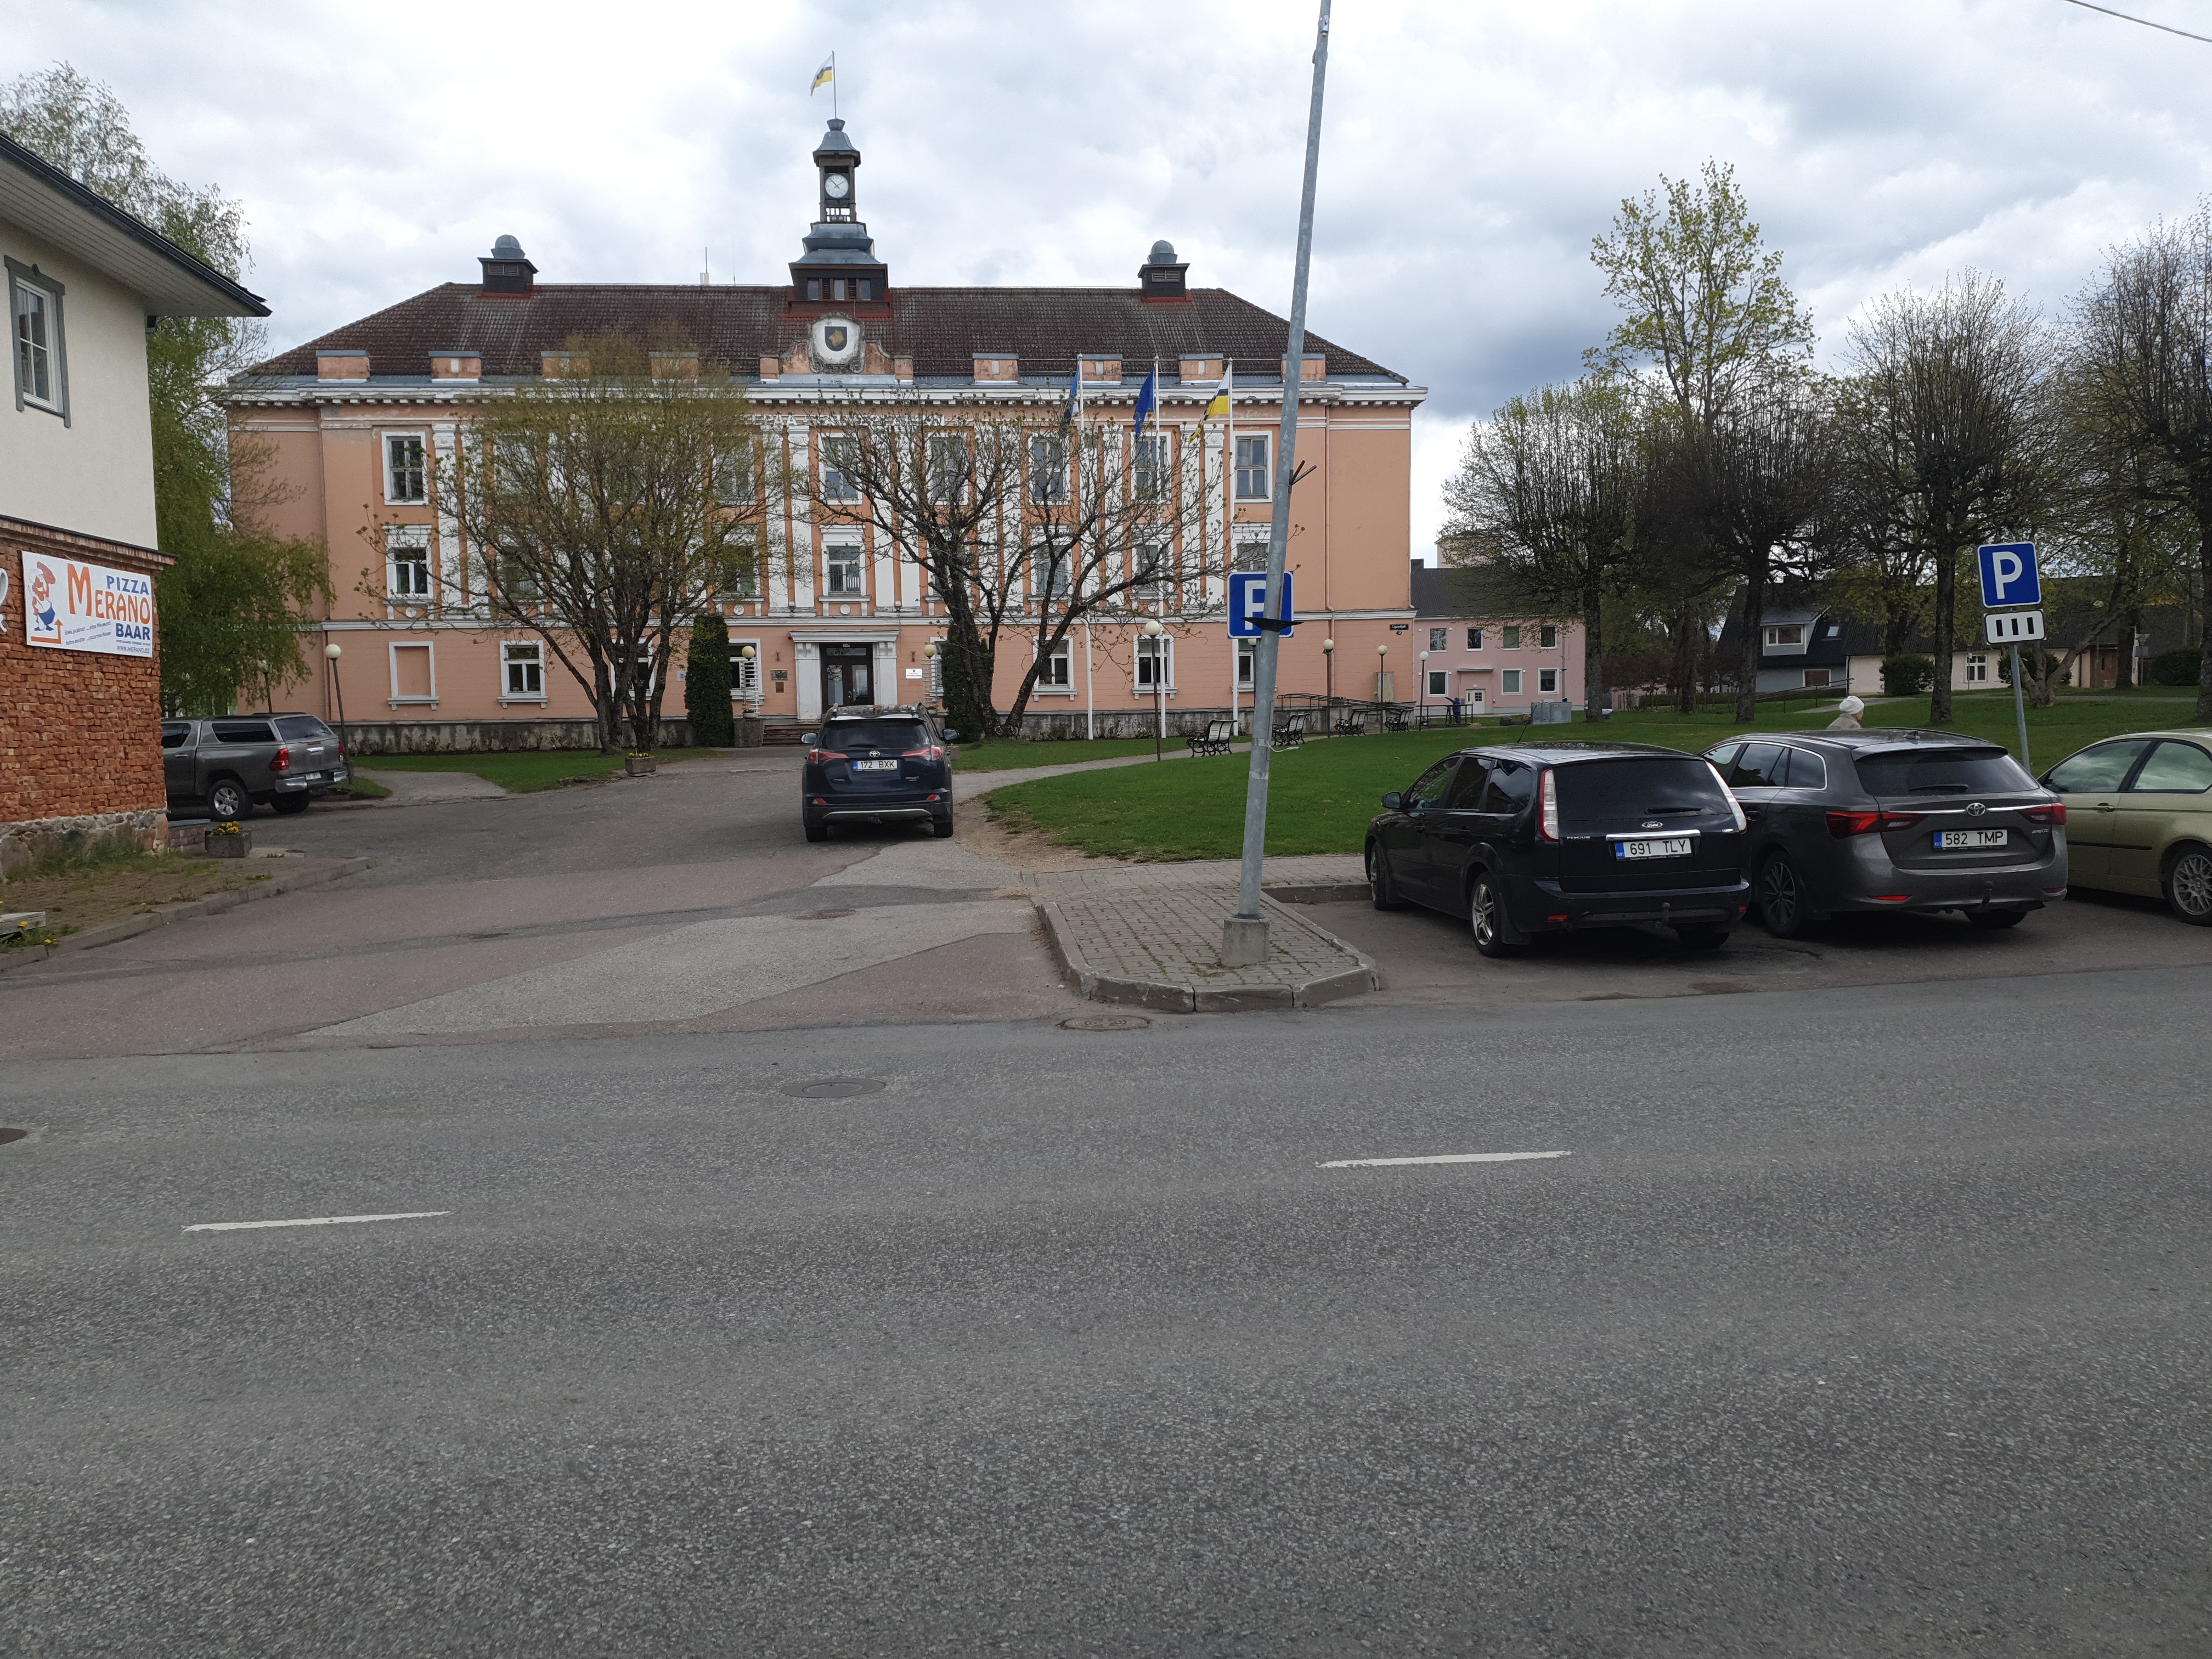 Otepää Municipality Building rephoto